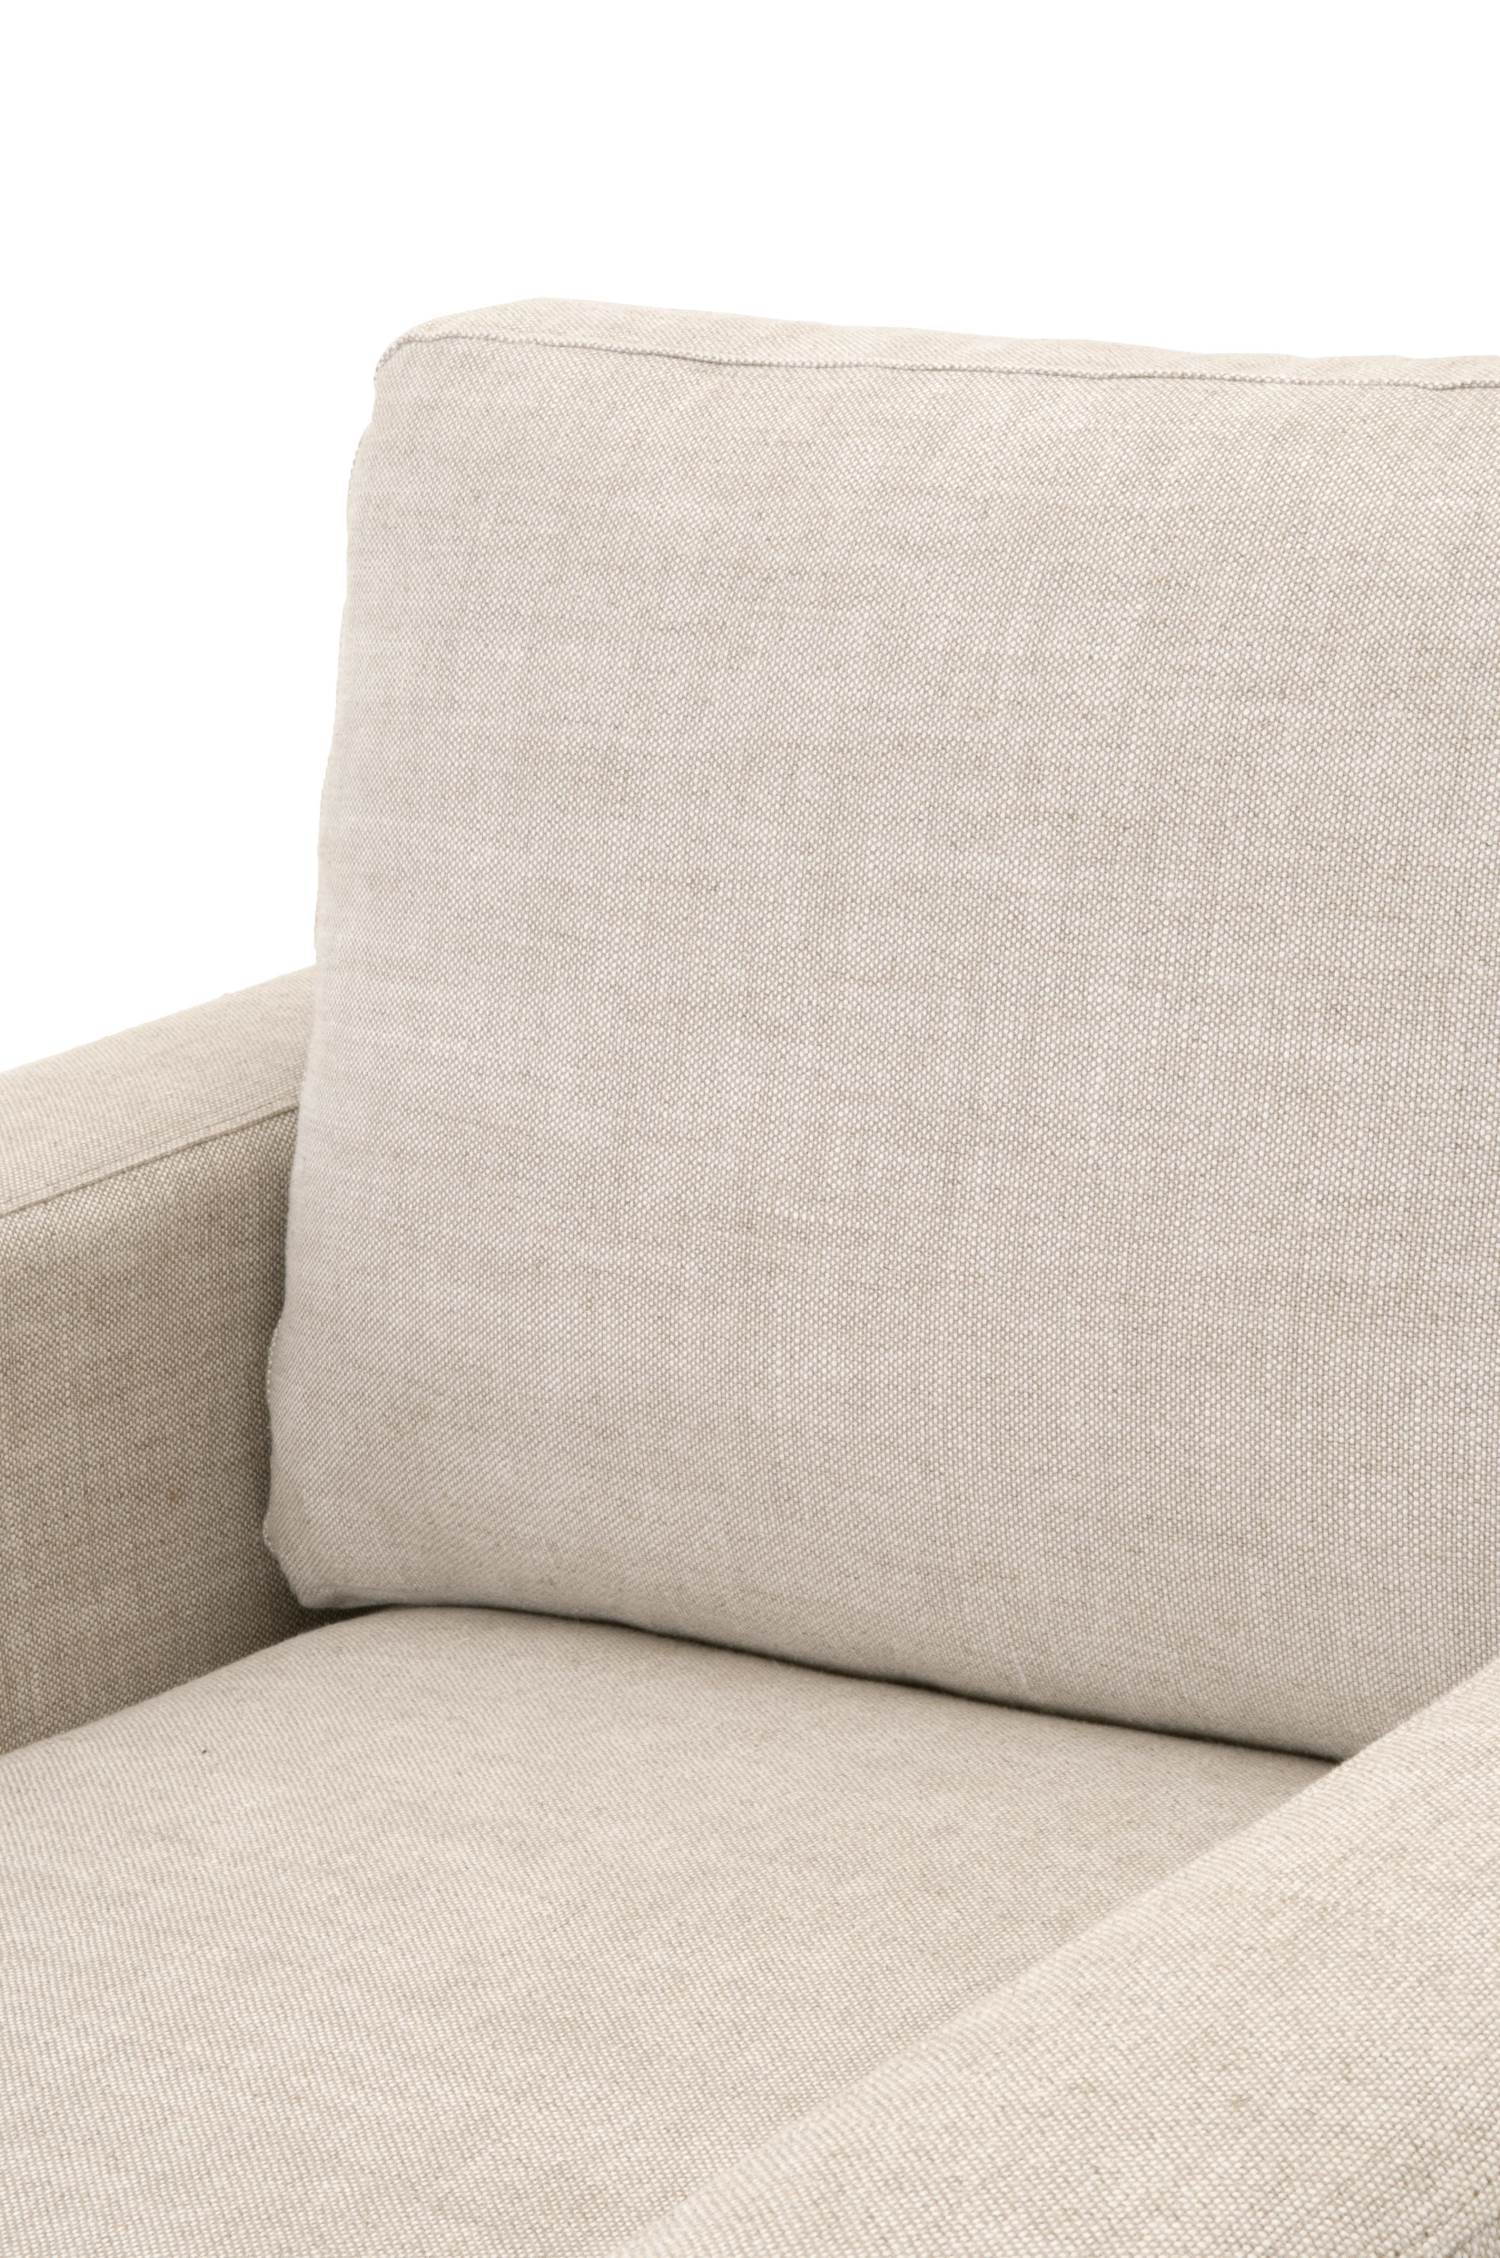 Maxwell Sofa Chair - Image 6